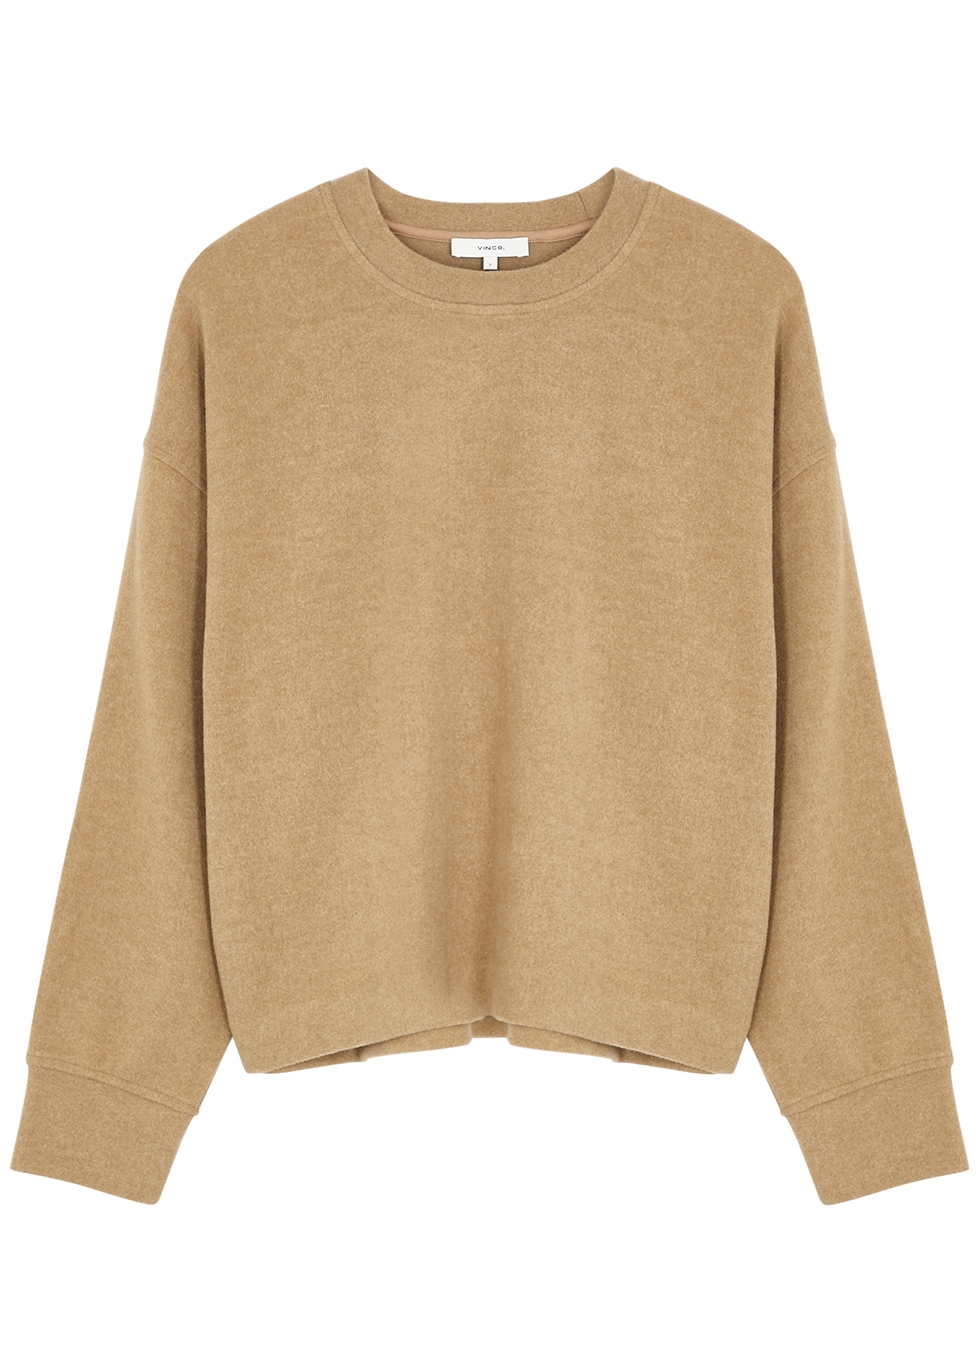 Camel fleece sweatshirt